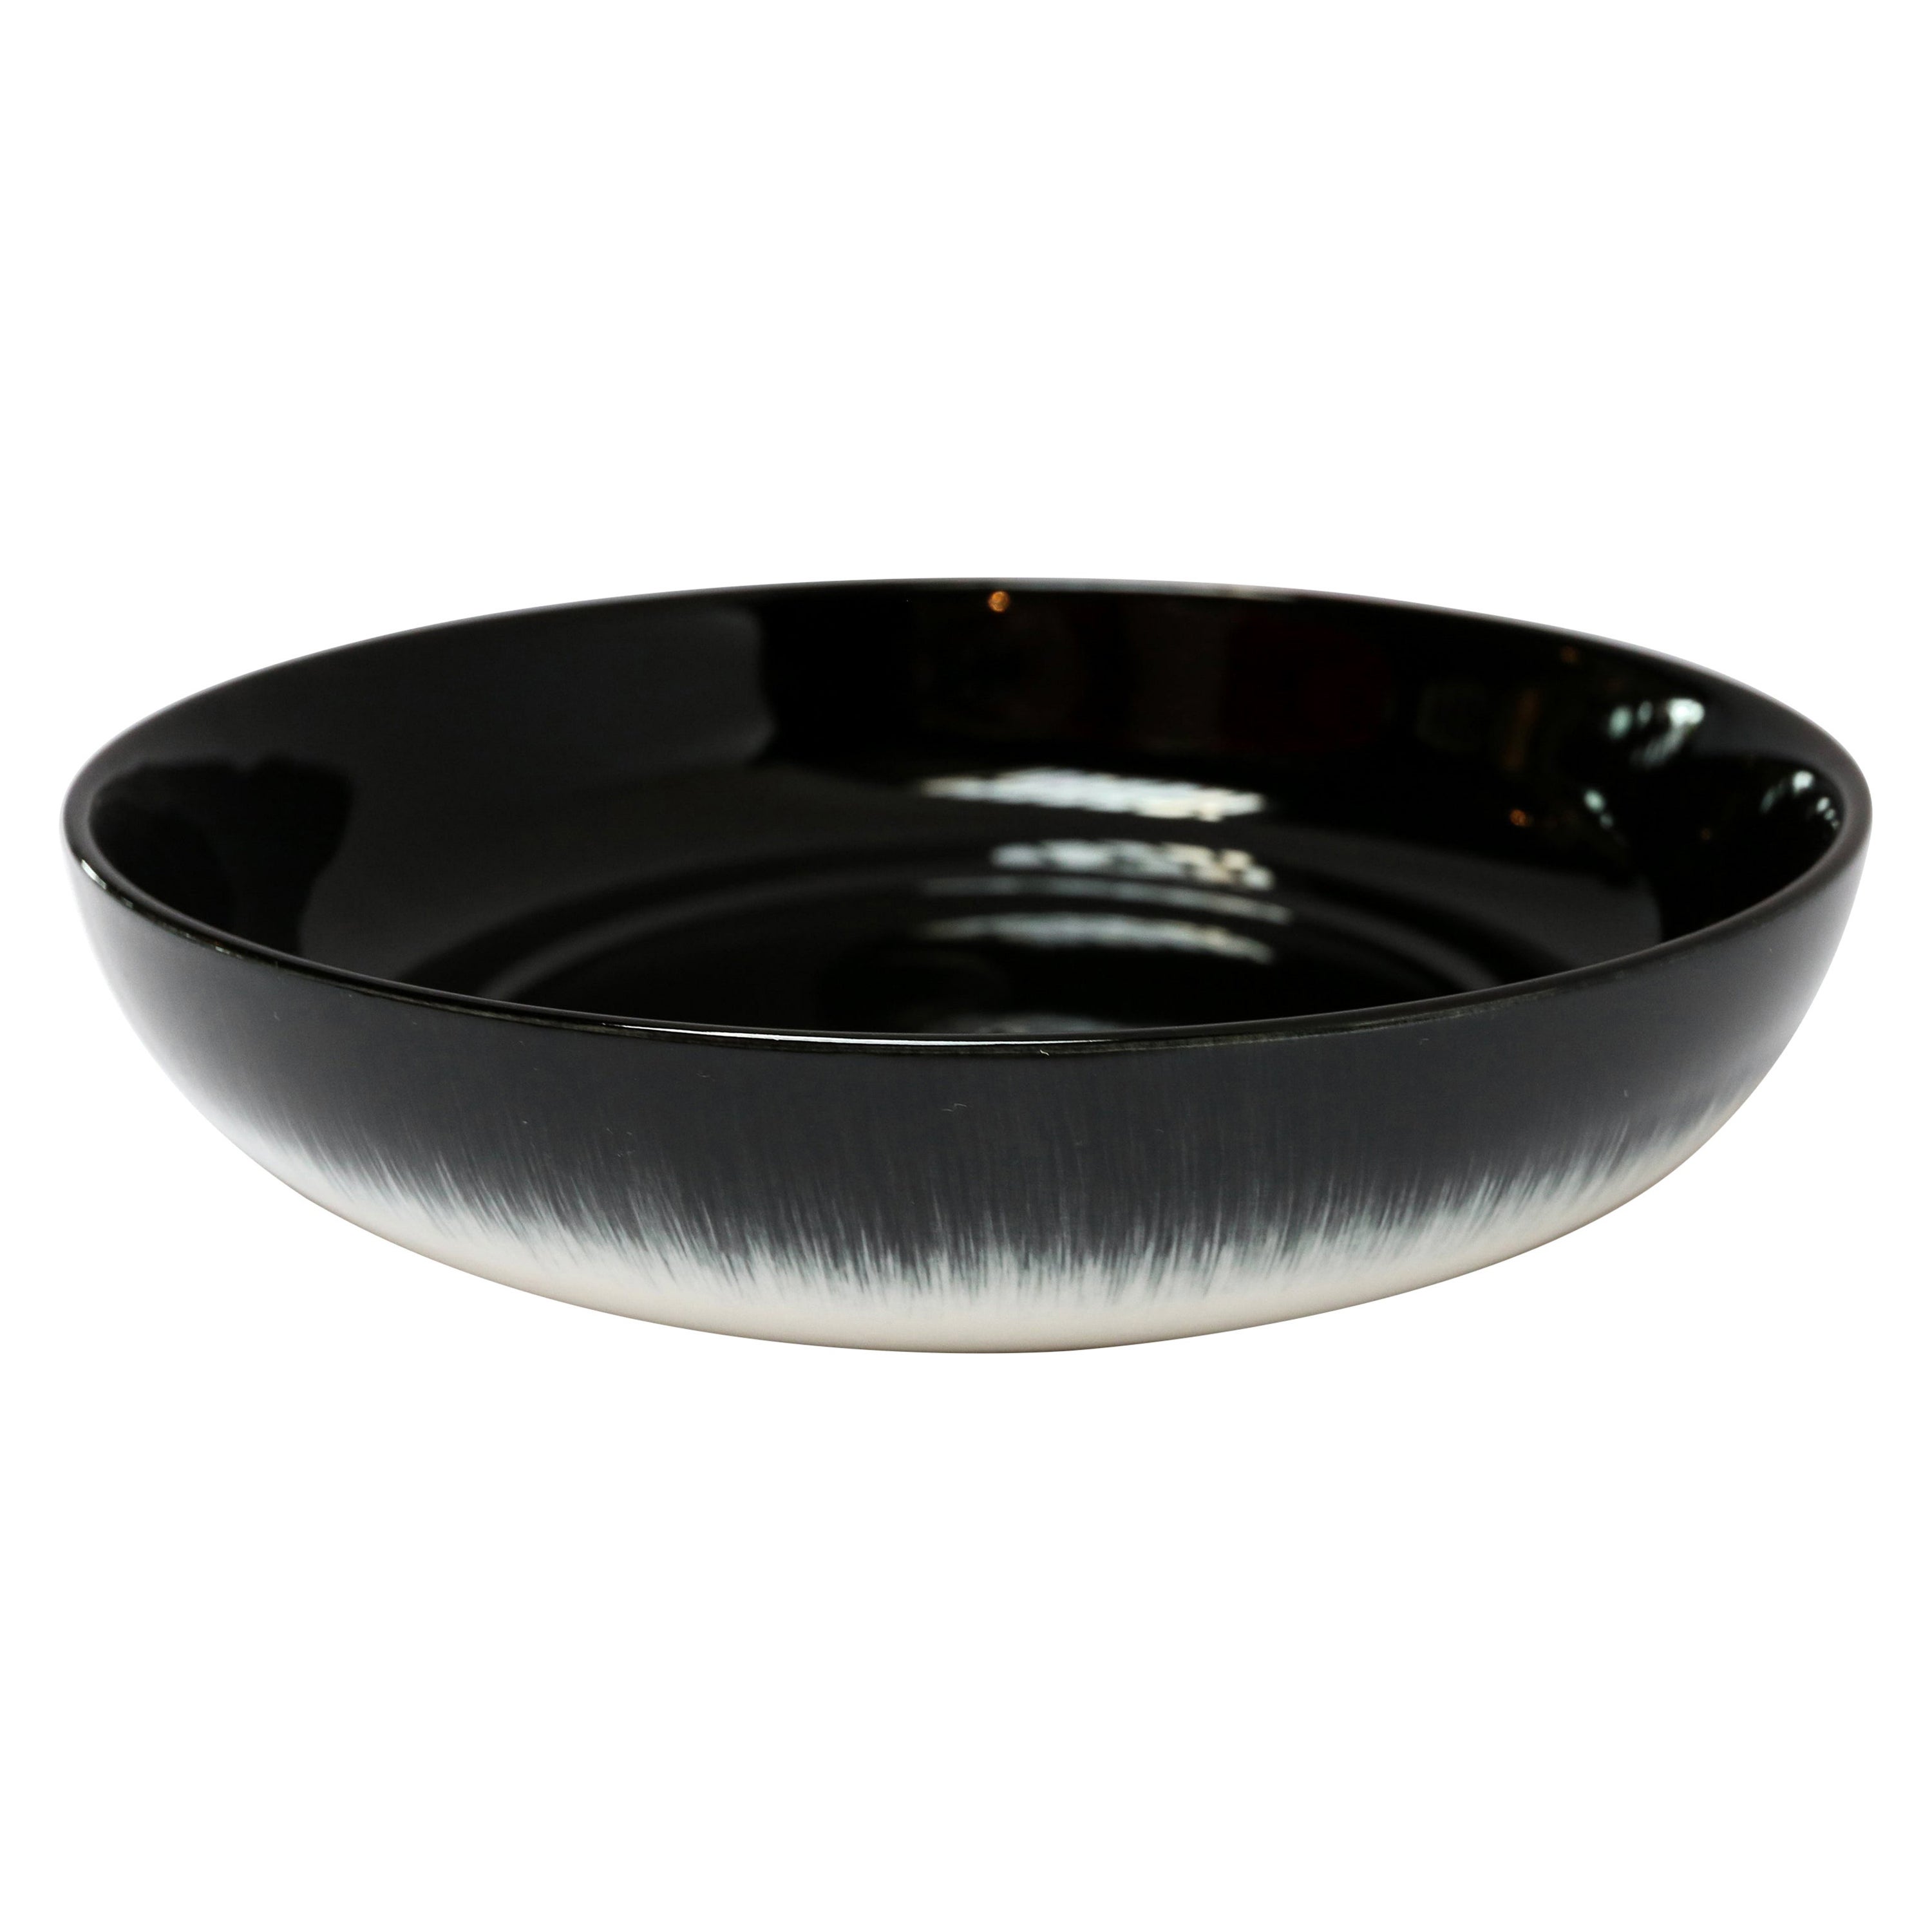 Ann Demeulemeester for Serax Dé Medium High Plate / Bowl in off White / Black